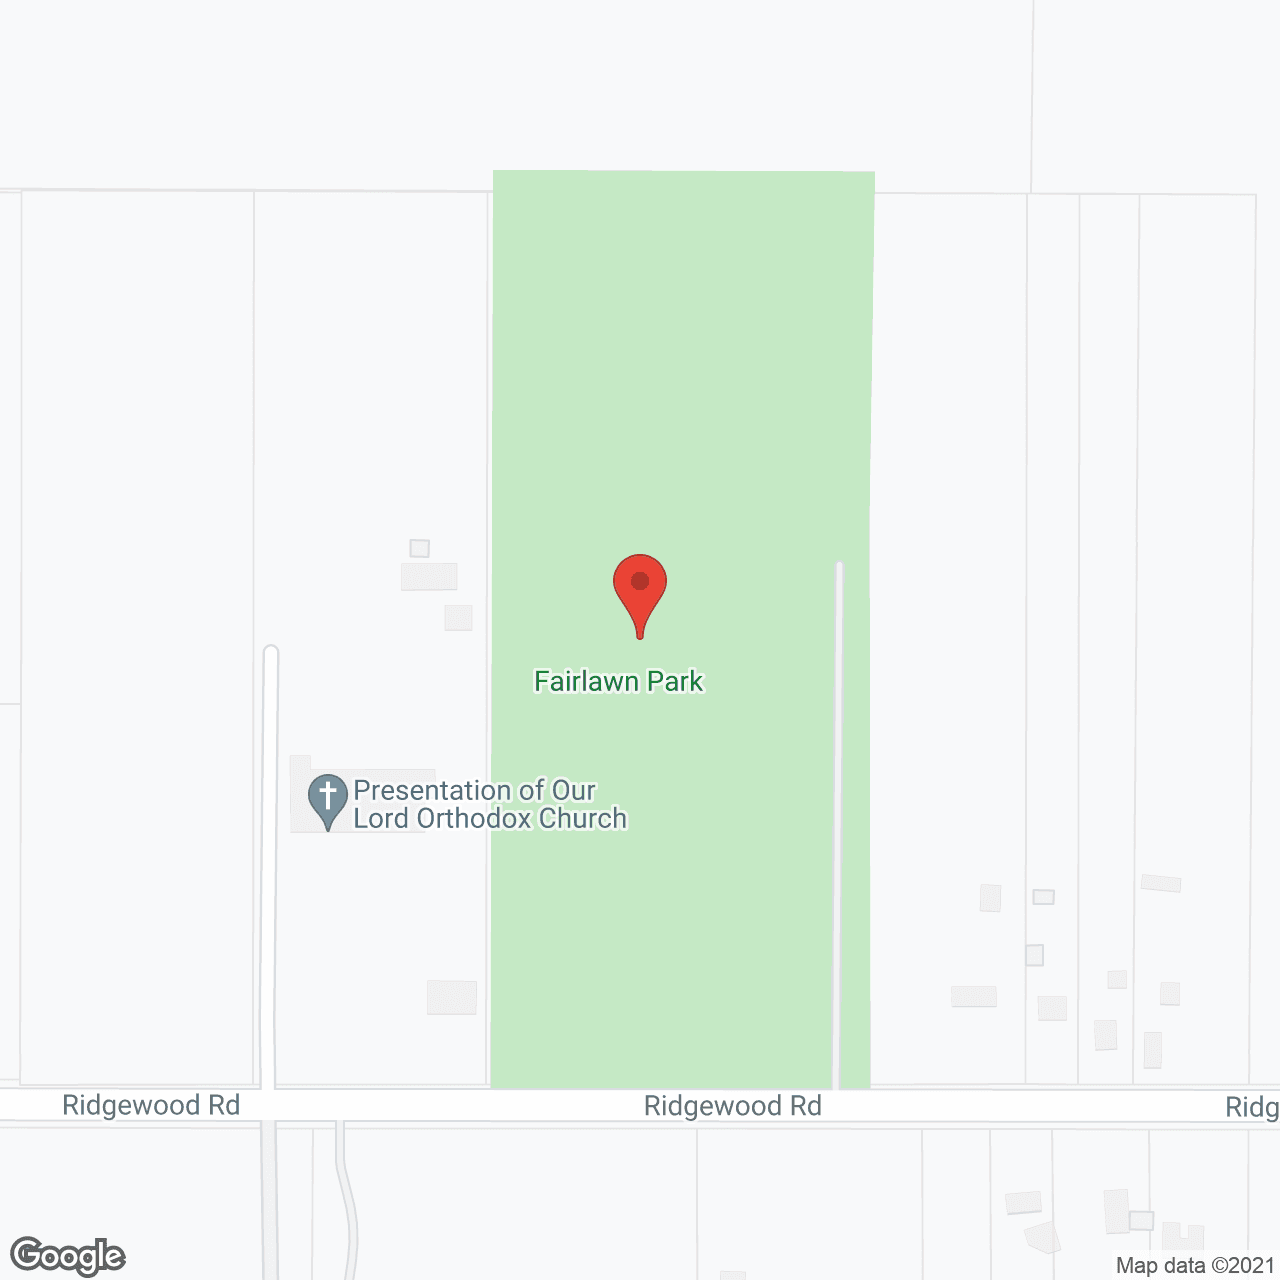 Sumner at Ridgewood in google map